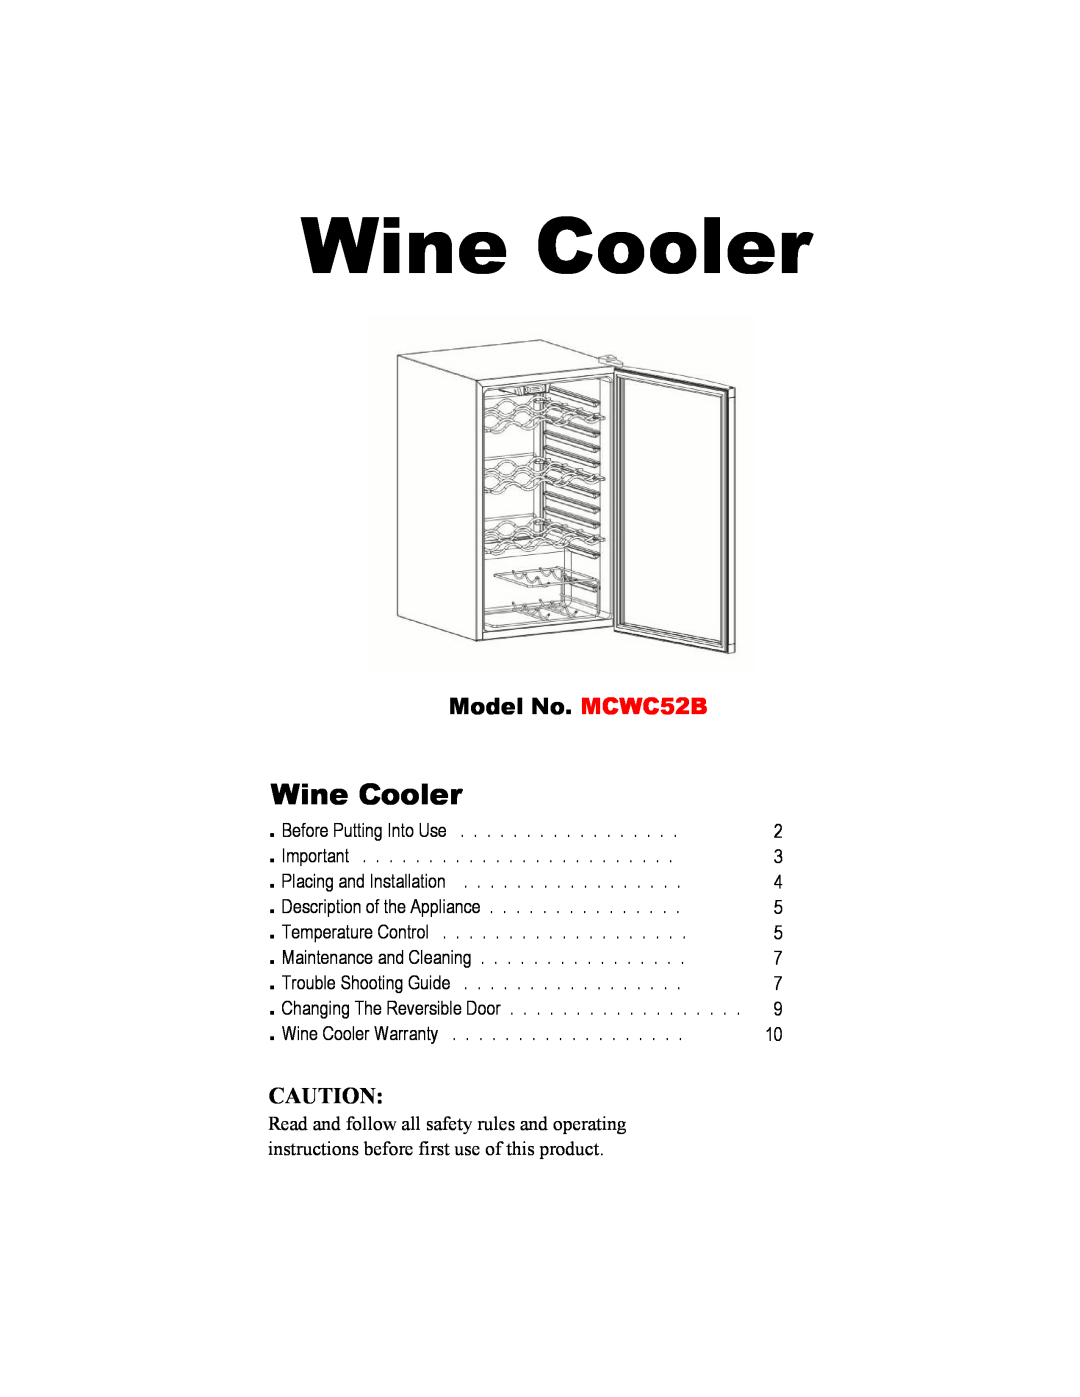 Magic Chef warranty Wine Cooler, Model No. MCWC52B 